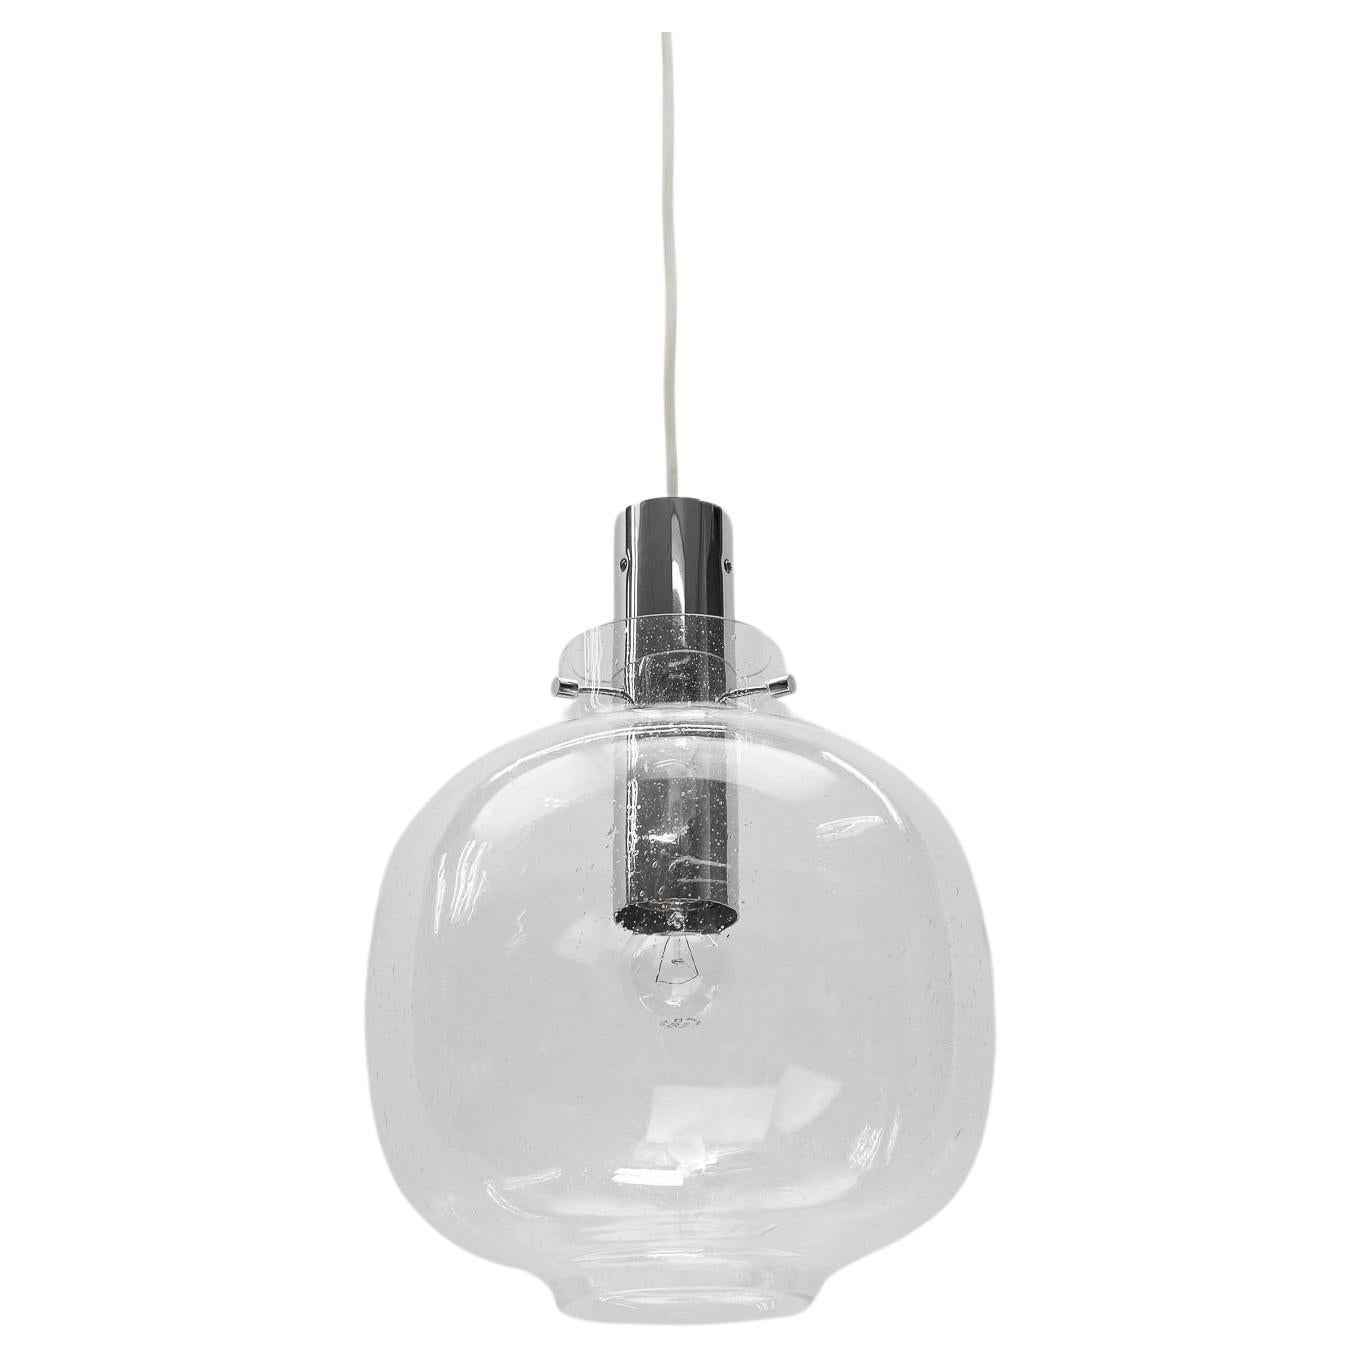 Lovely Mid Century Modern Chrome & Glass Pendant Lamp, 1960s Germany For Sale